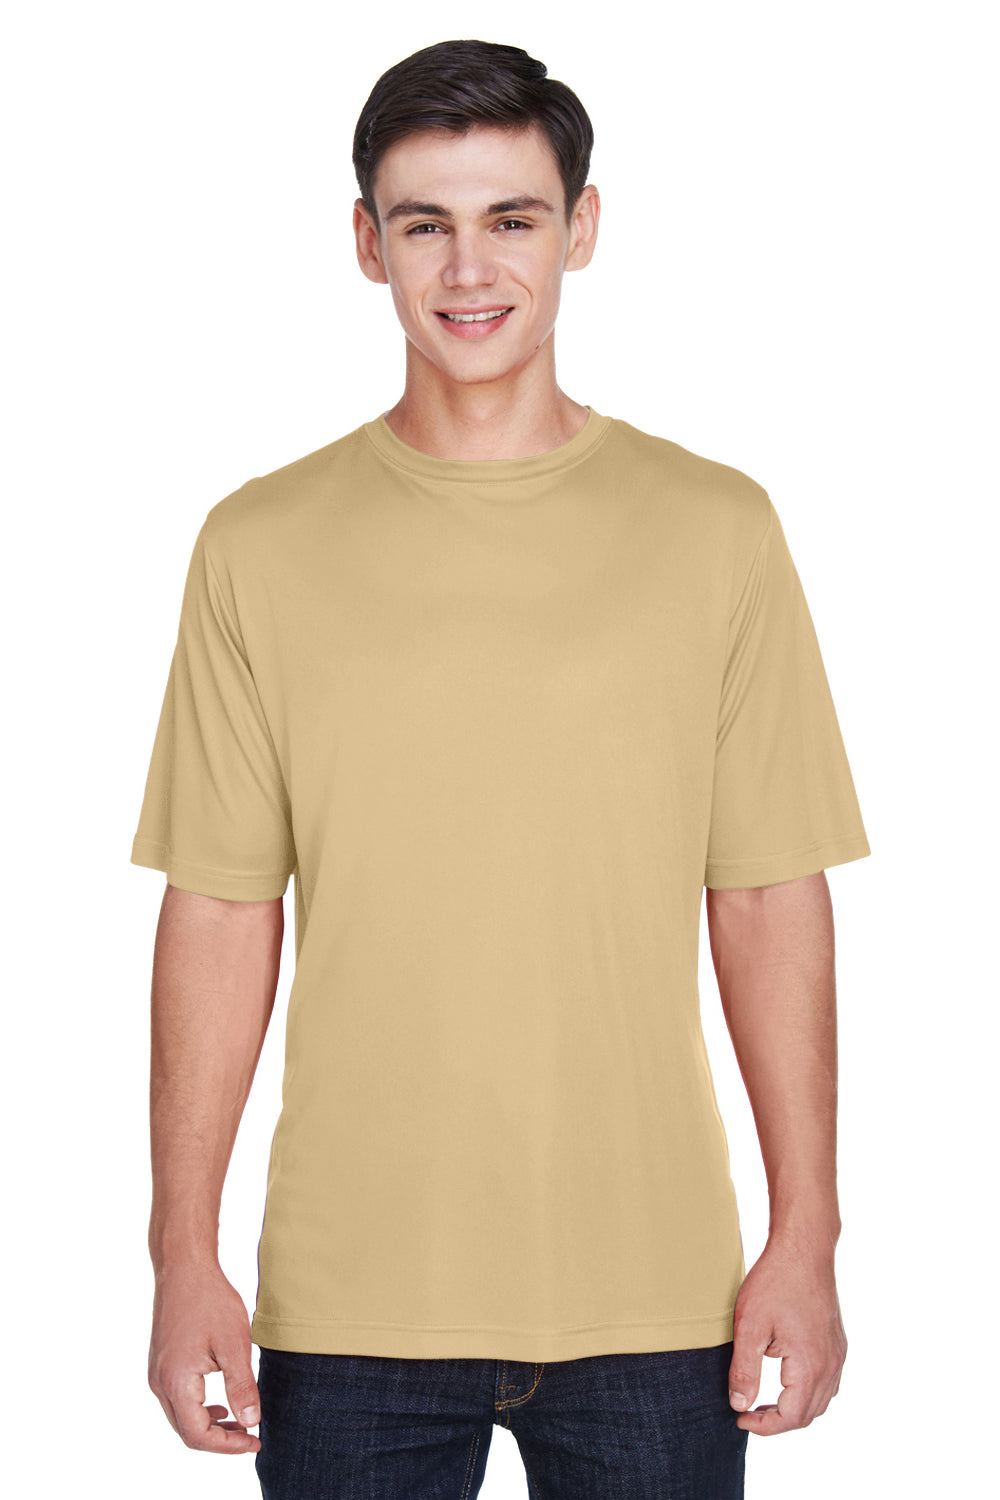 Team 365 TT11 Mens Zone Performance Moisture Wicking Short Sleeve Crewneck T-Shirt Vegas Gold Front